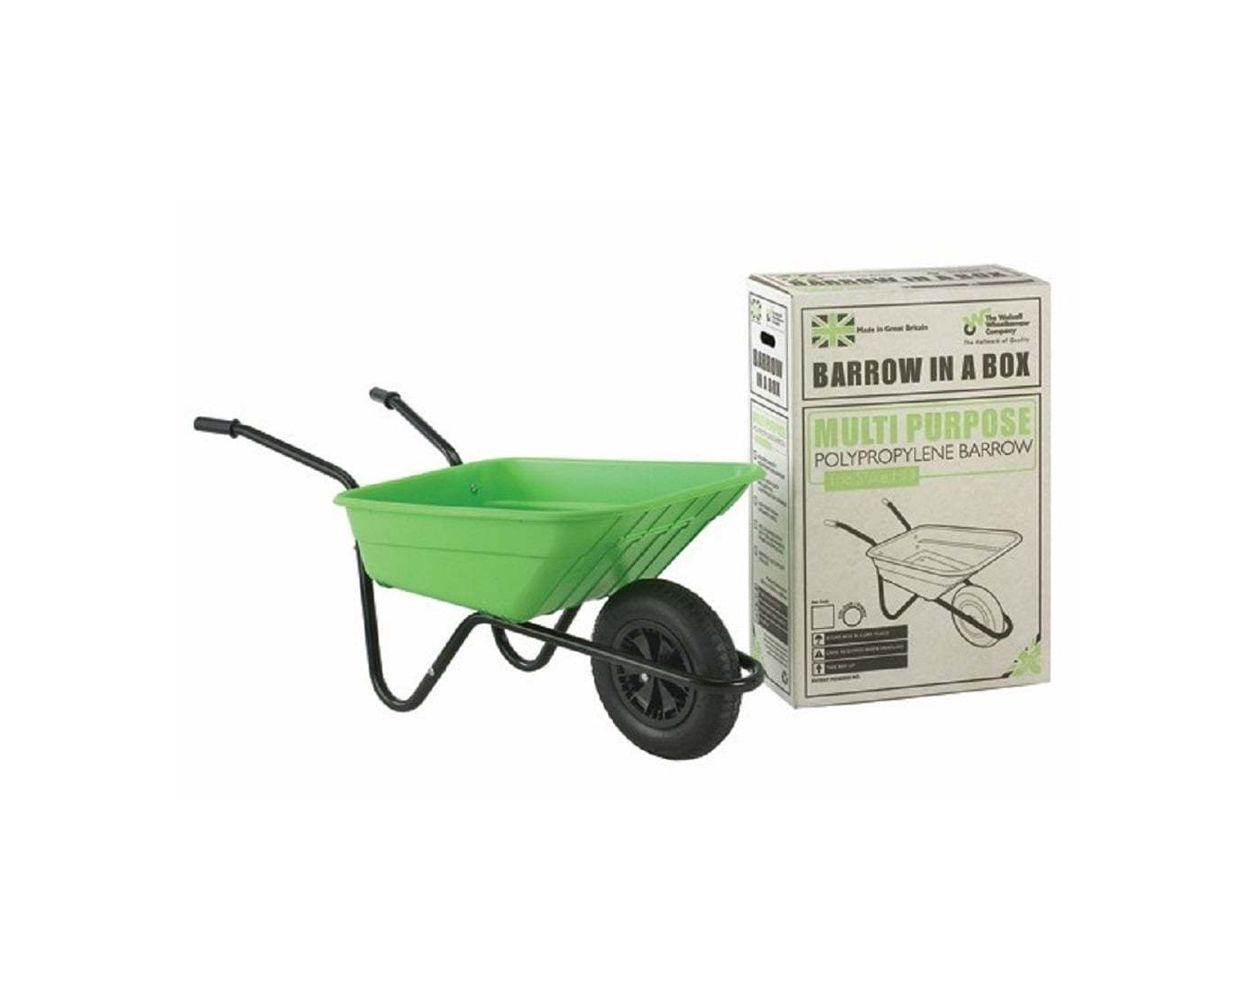 Walsall Wheelbarrows 90 Litre Plastic Barrow in a Box, Pneumatic Wheel, Lime